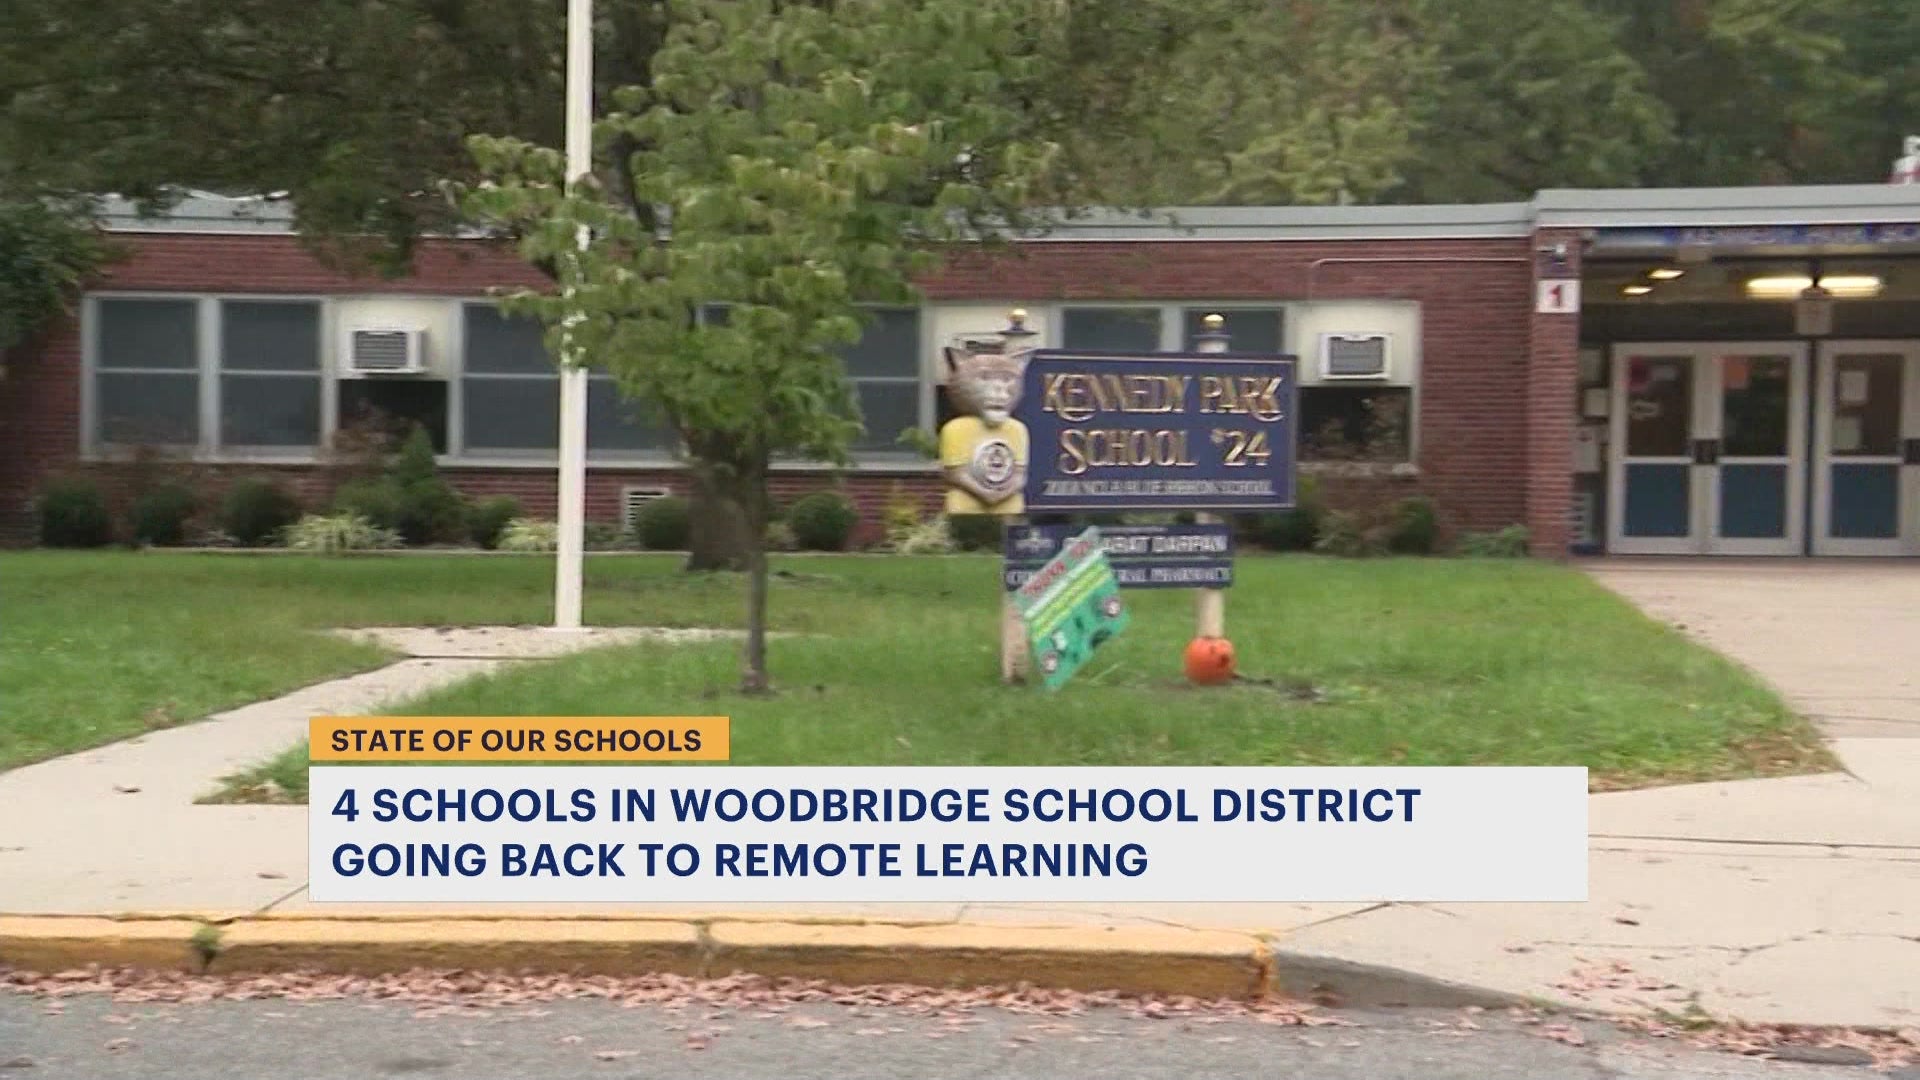 Woodbridge Township School District School Street Woodbridge NJ 07095